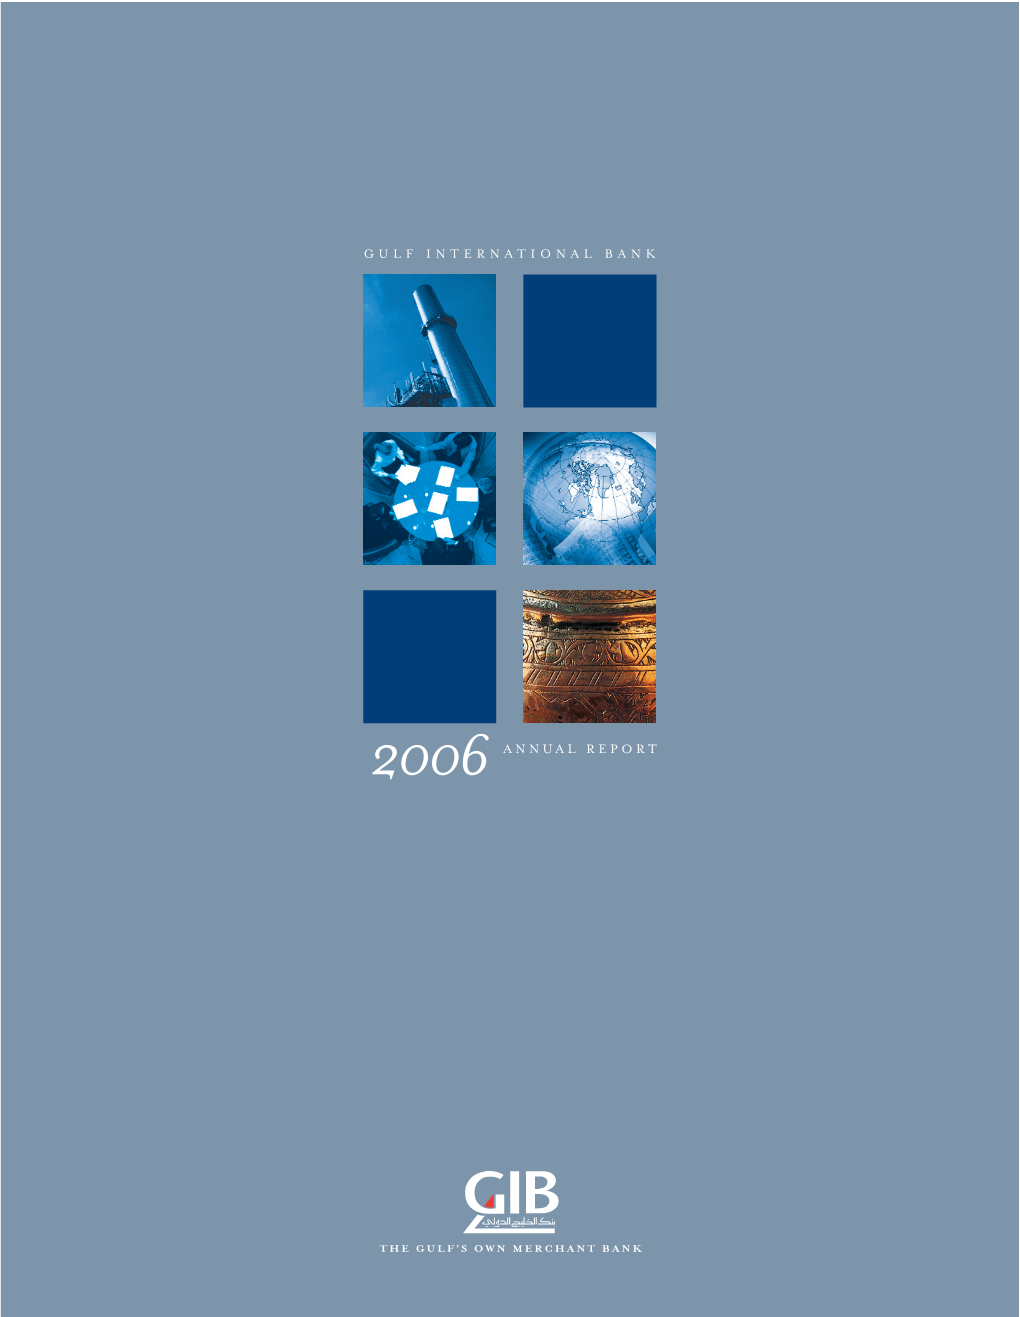 GIB Annual Report 2006